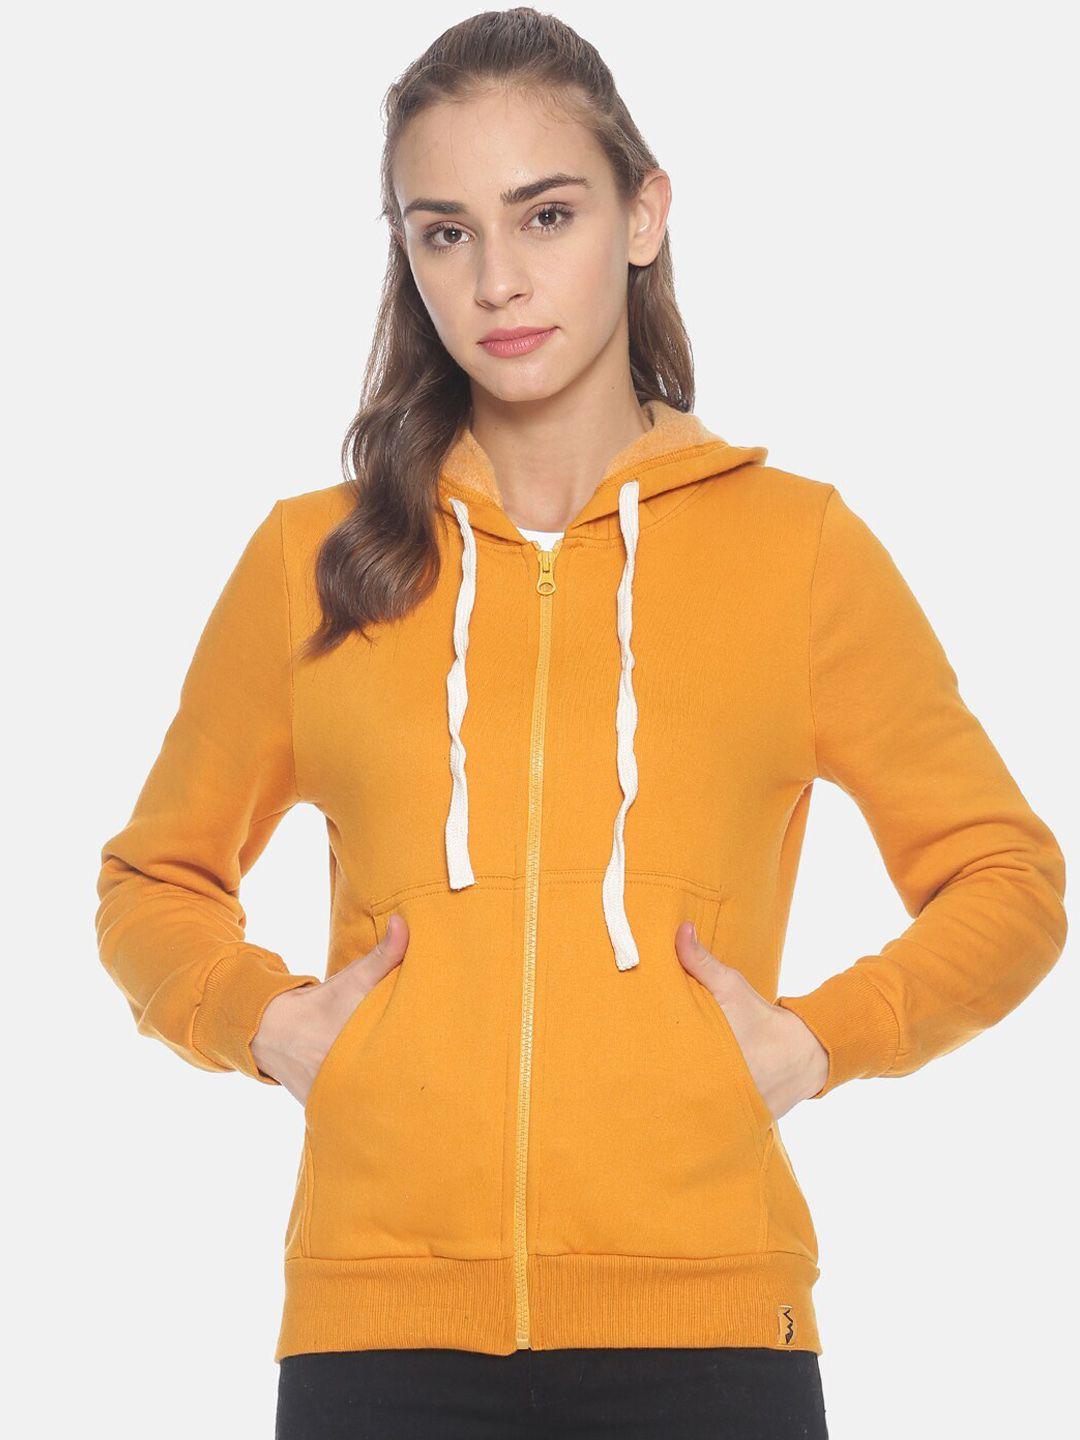 campus-sutra-women-mustard-yellow-solid-hooded-sweatshirt